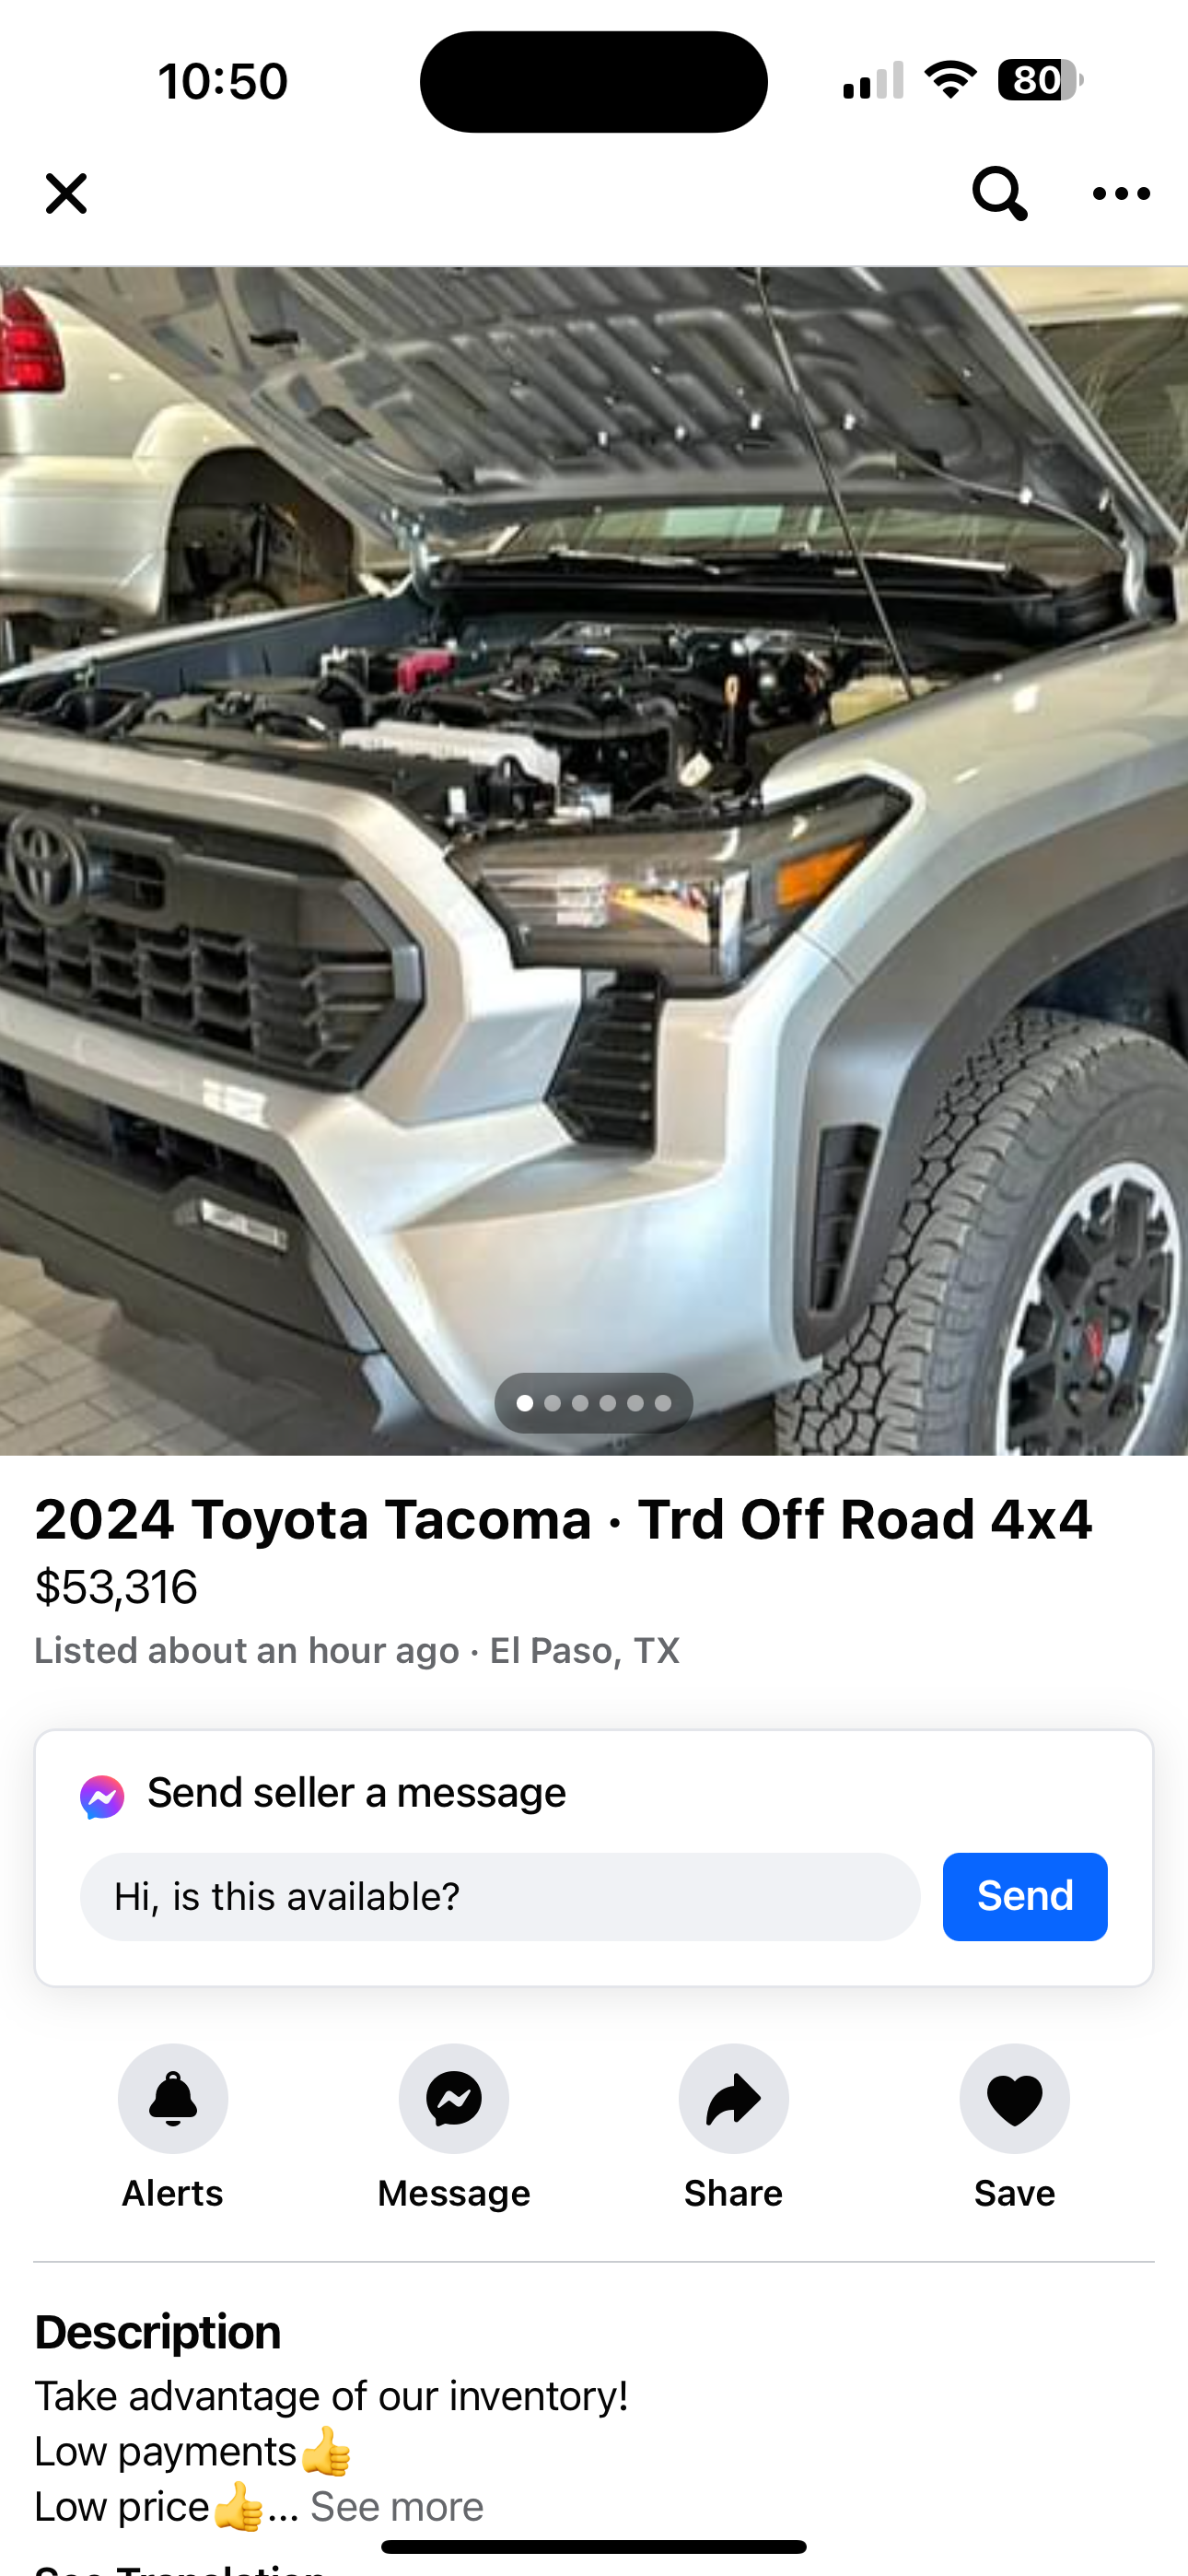 2024 Tacoma Updates of 2024 Tacomas on dealer lots (dealership, pricing, photos) IMG_2526